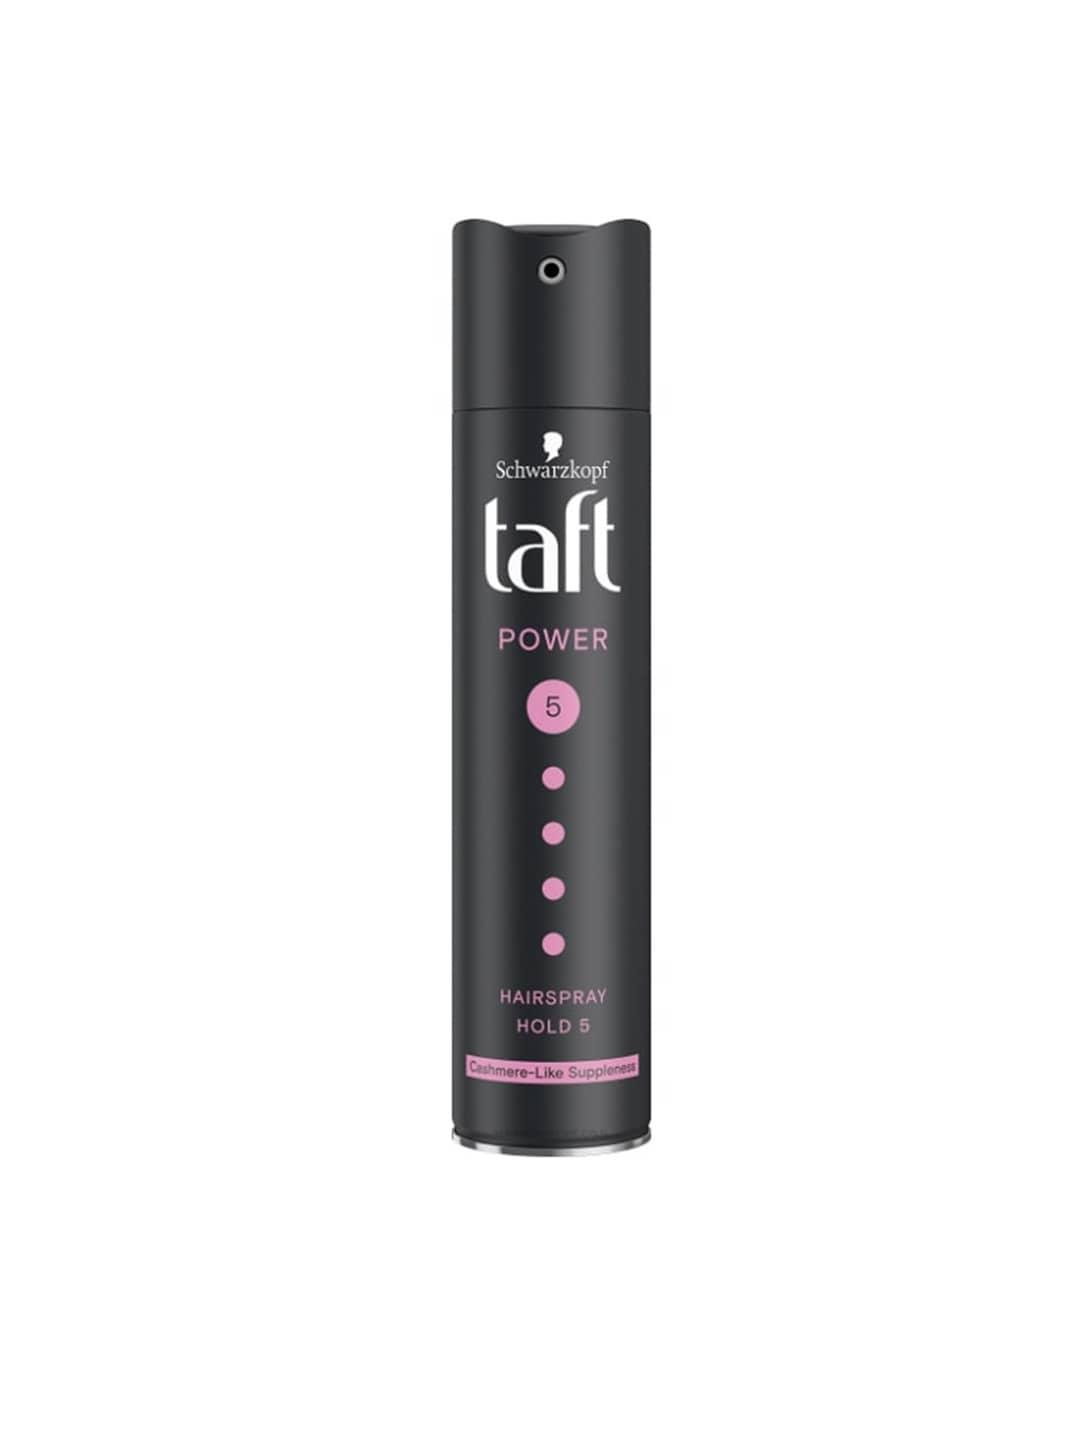 taft Power 5 Hair Spray for Cashmere Like Suppleness - 250 ml